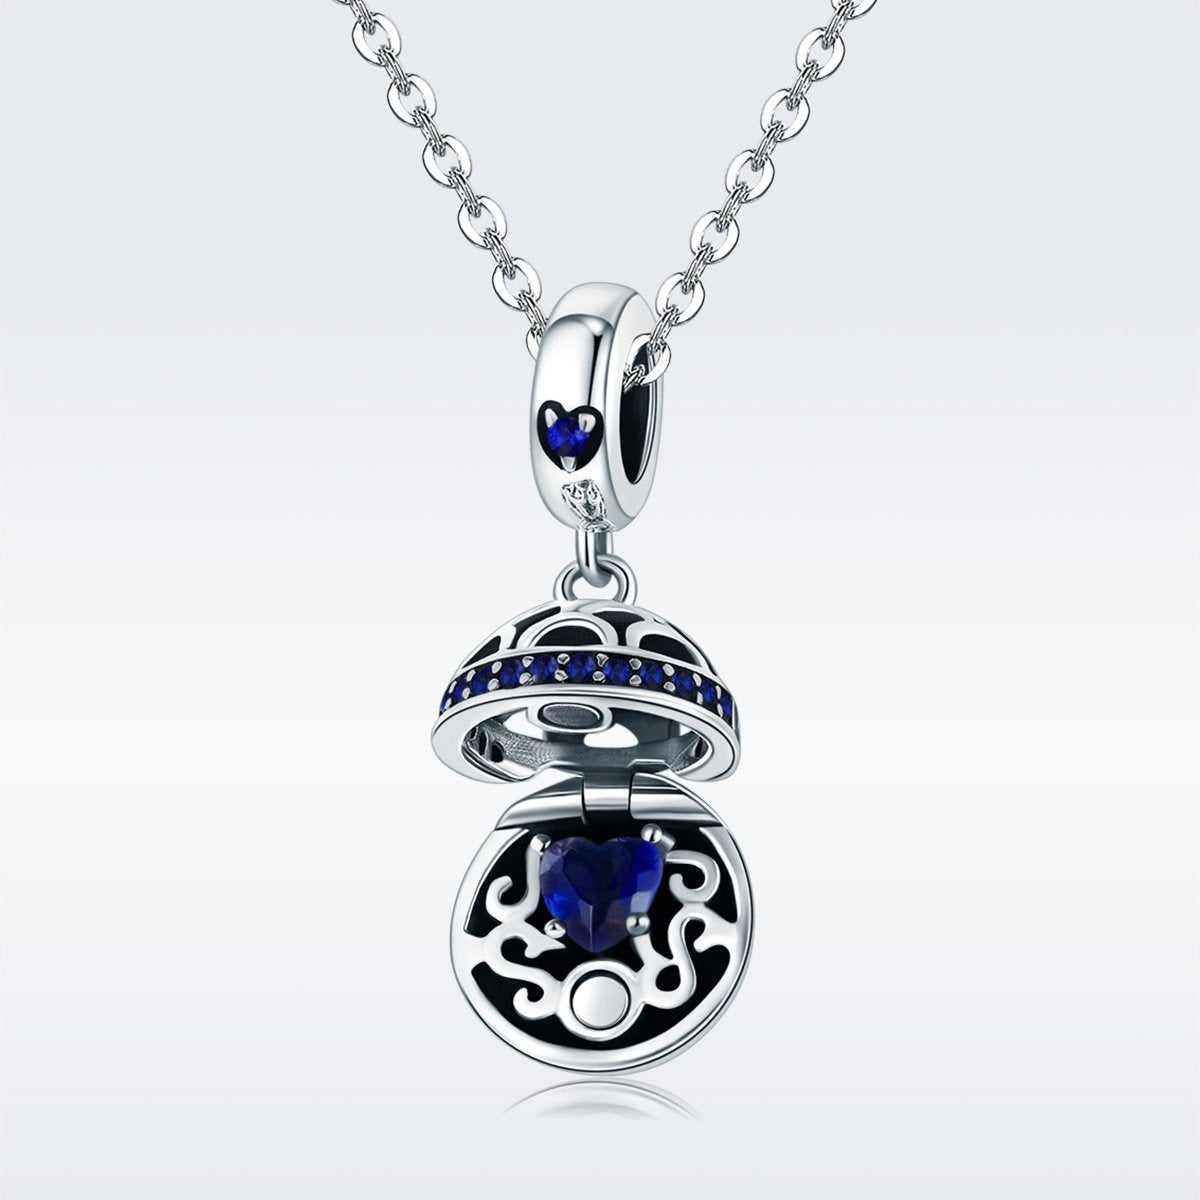 Sterling 925 silver charm the hollow round box blue pendant fits Pandora charm and European charm bracelet Xaxe.com